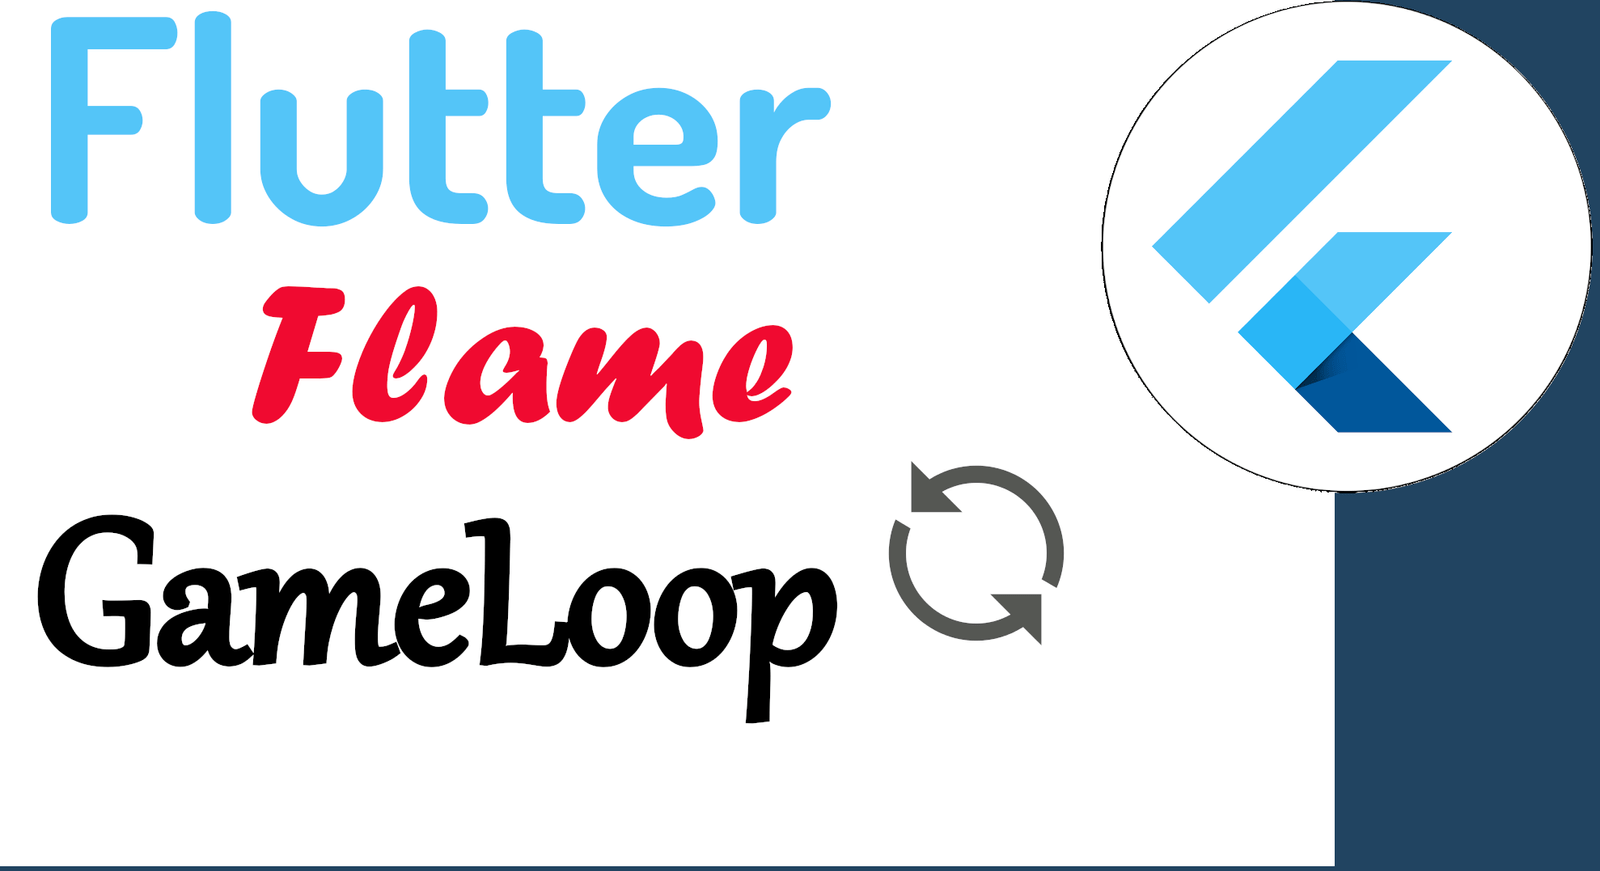 Game loop: Game loop in Flame with Flutter